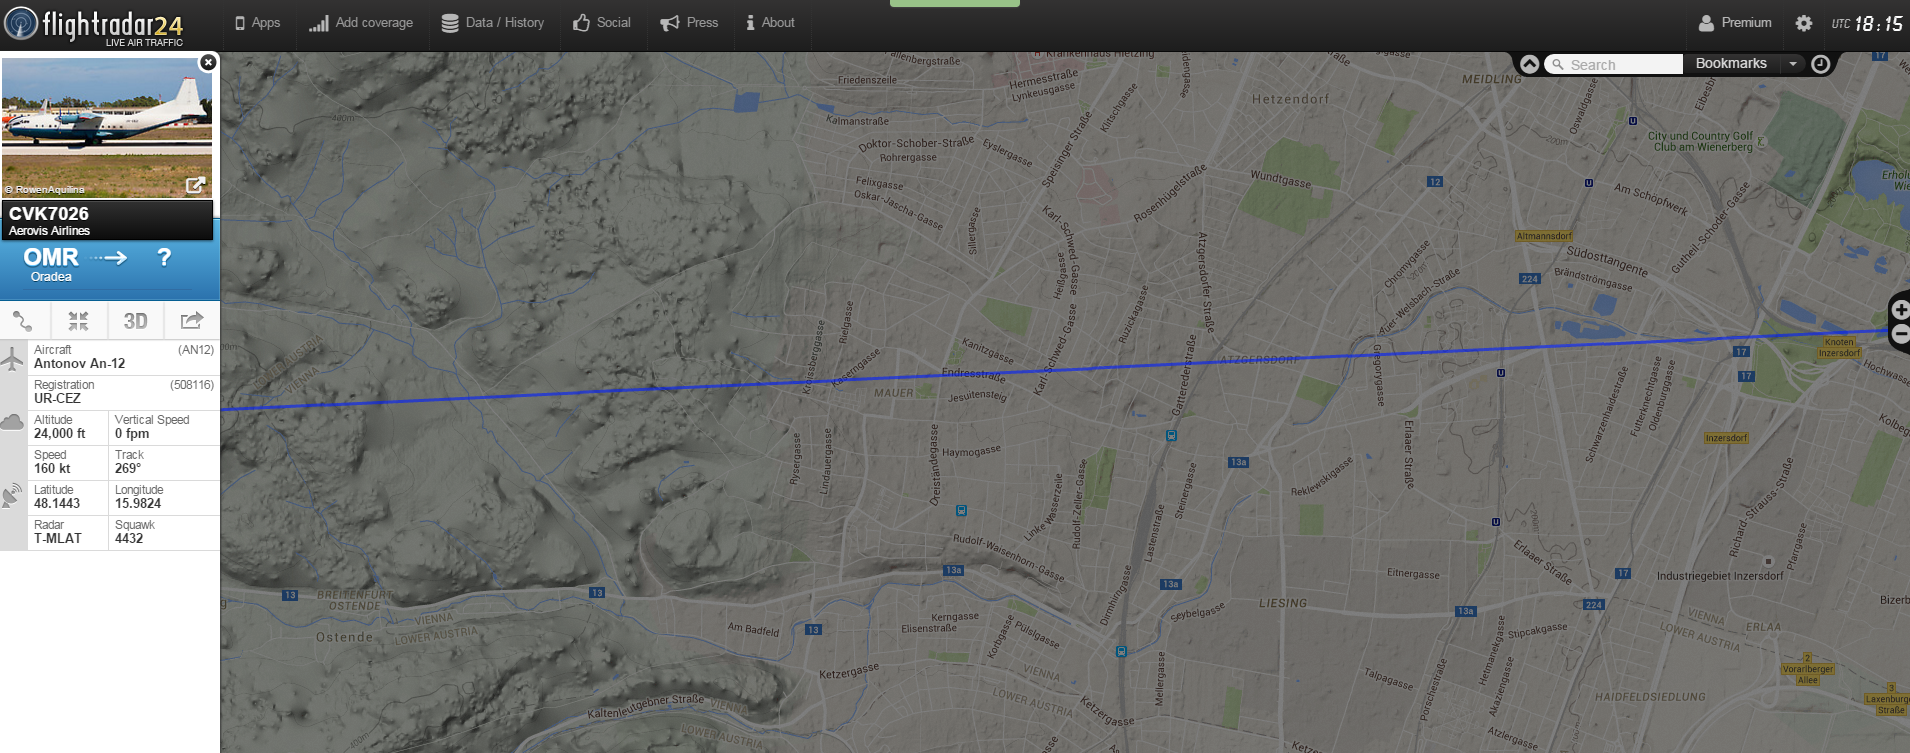 trotz 8 km Höhe laute Antonov An-12 über Liesing